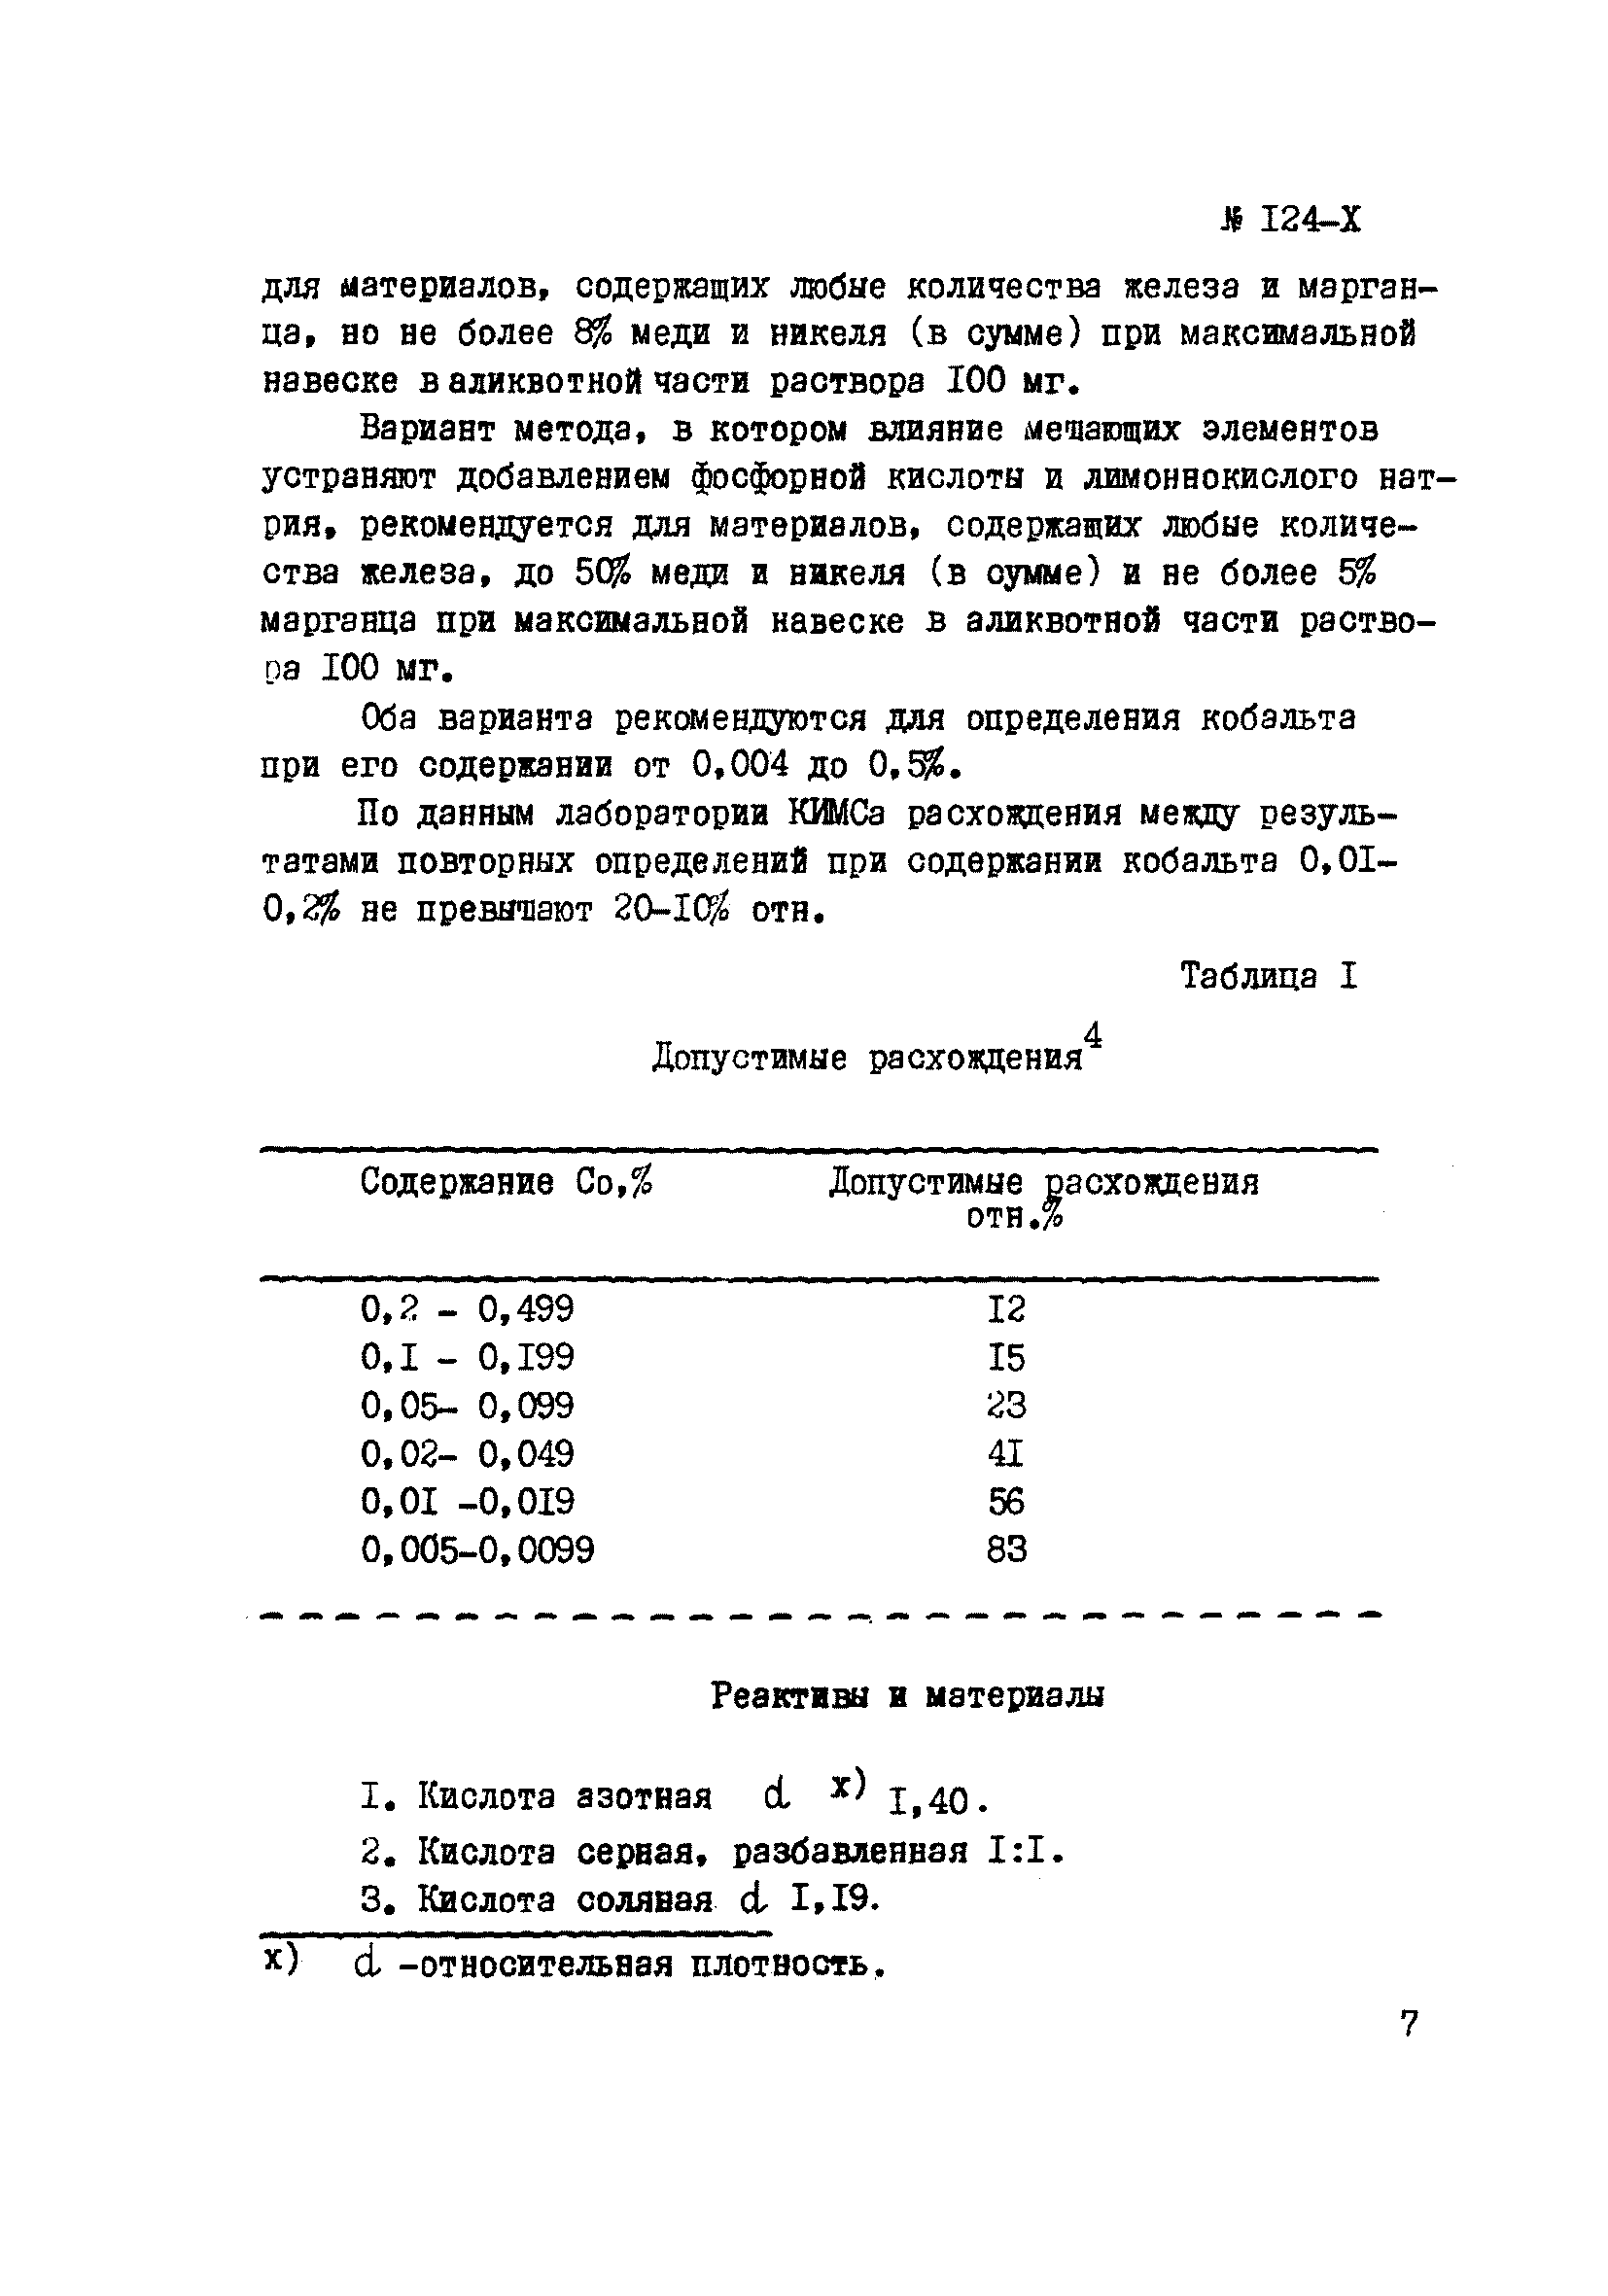 Инструкция НСАМ 124-Х